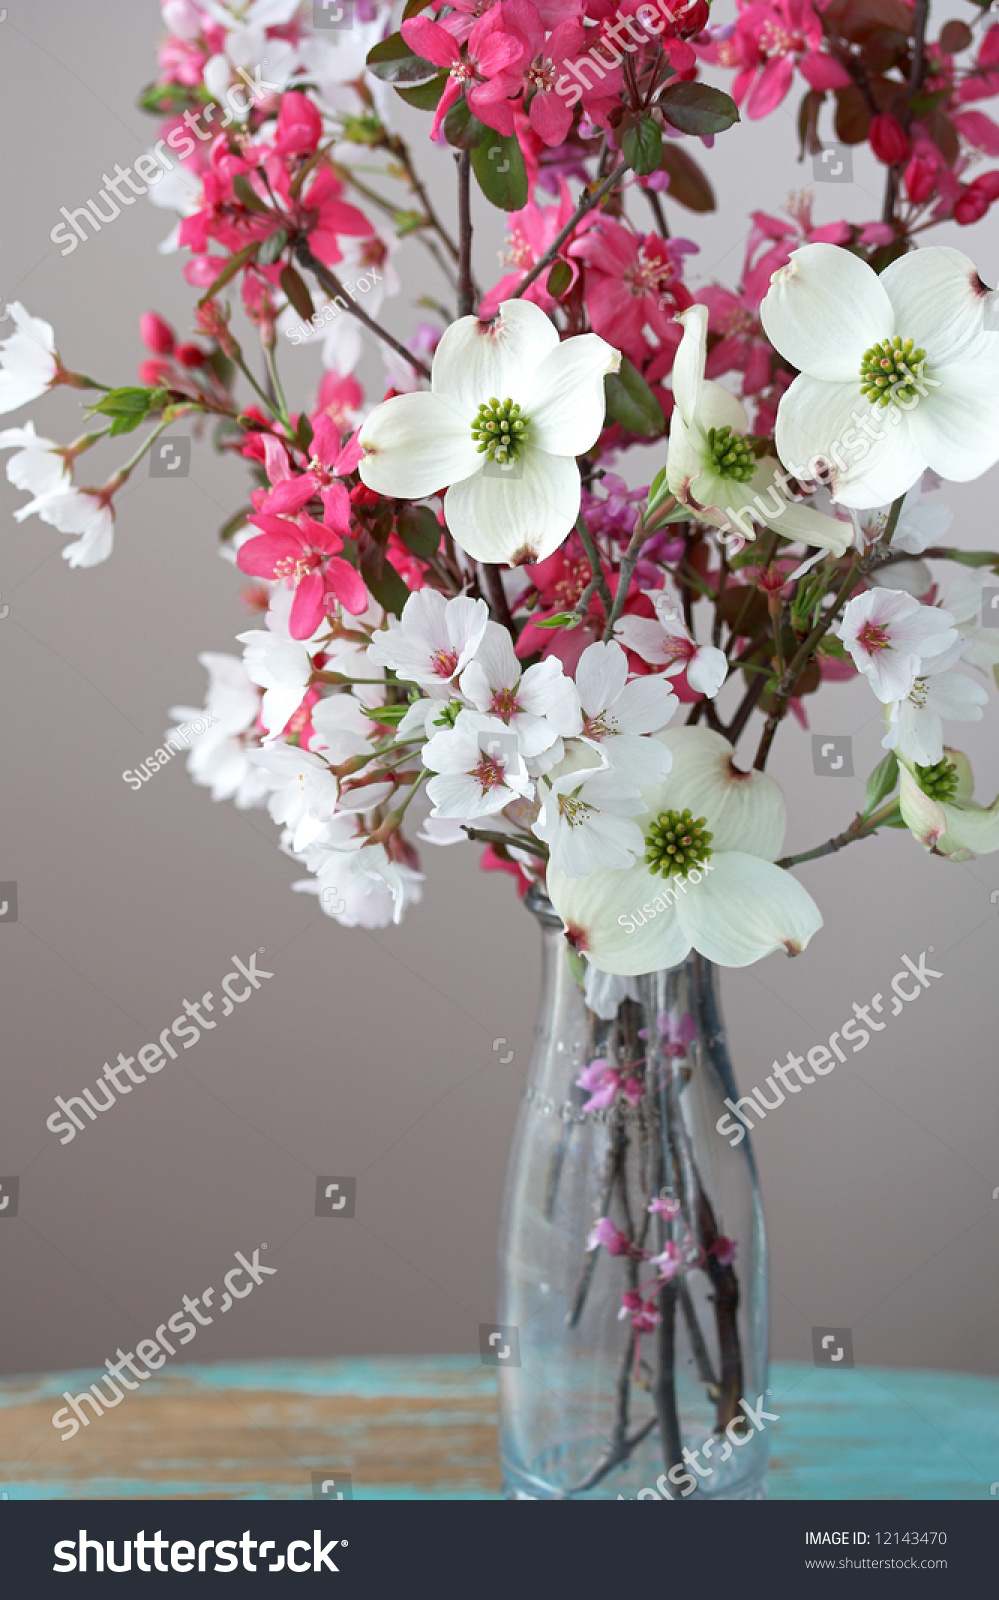 Floral Still Life Stock Photo 12143470 : Shutterstock